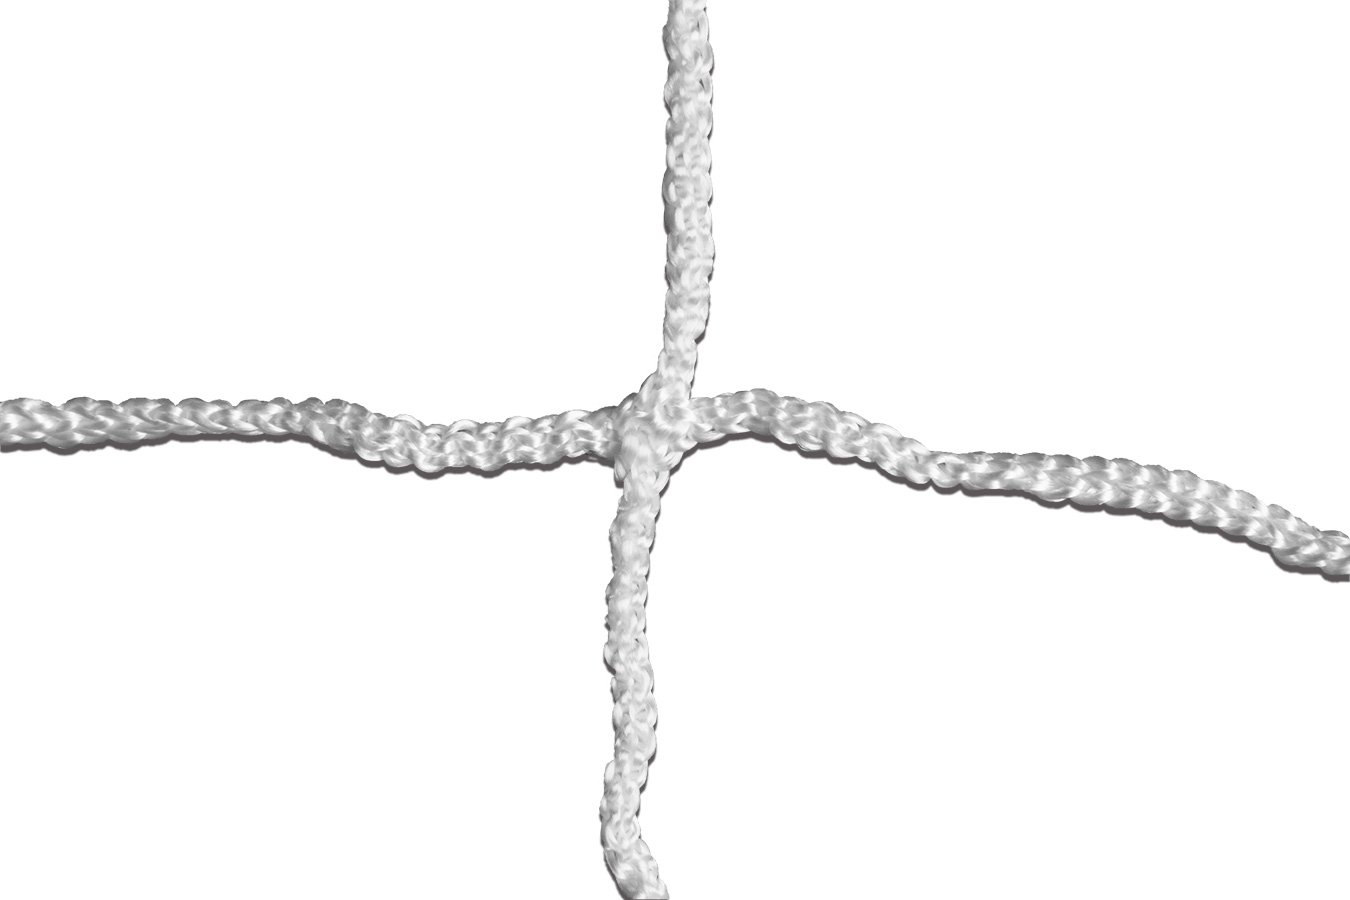 Kwikgoal 3mm Solid Braid Knotless Net | 3B6821 Nets Kwikgoal 